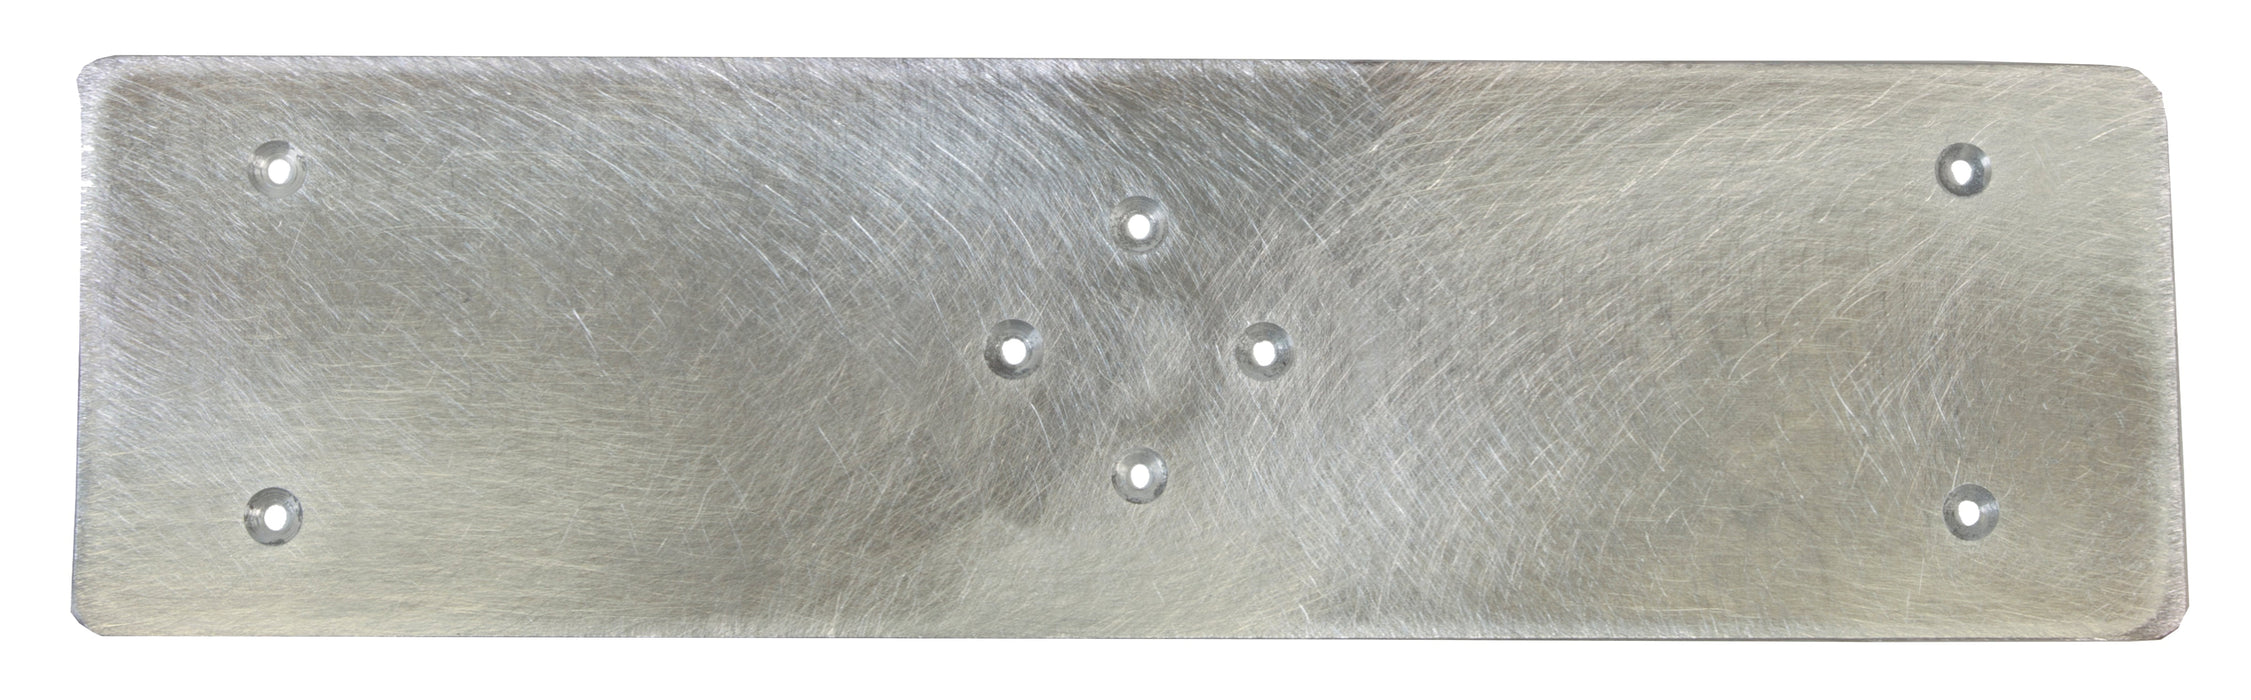 Doodle Mop Aluminum Driver Plate - Square Scrub SS 051664